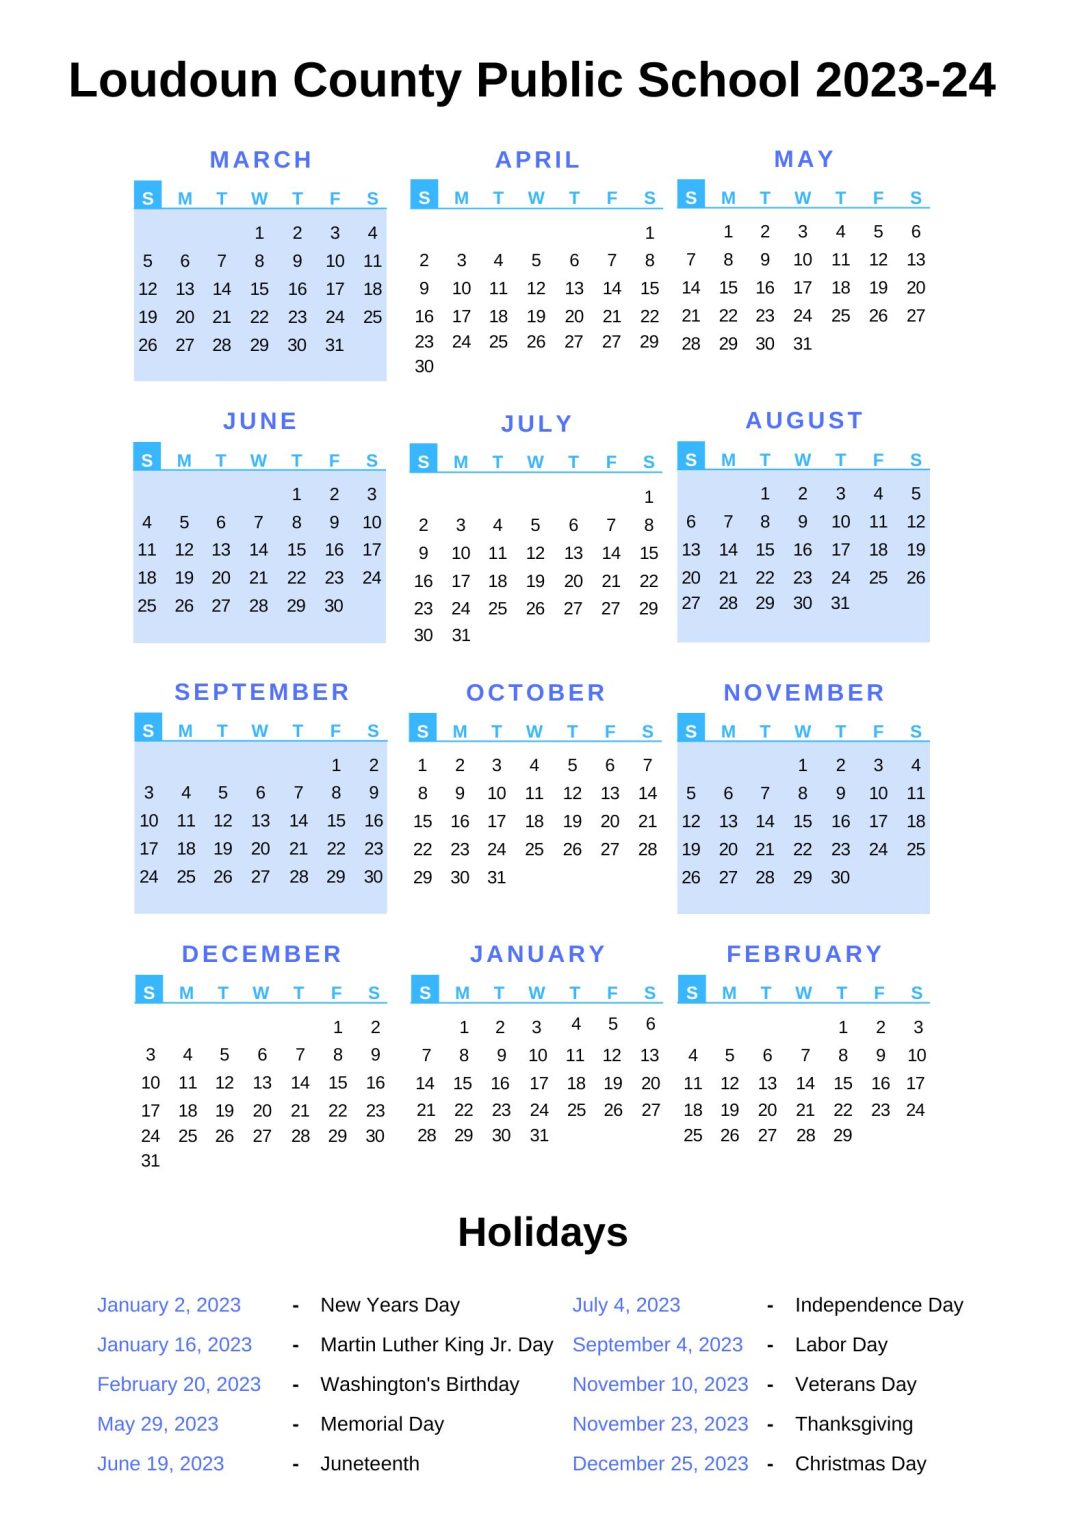 Loudoun County Public Schools Calendar [LCPS] 202324